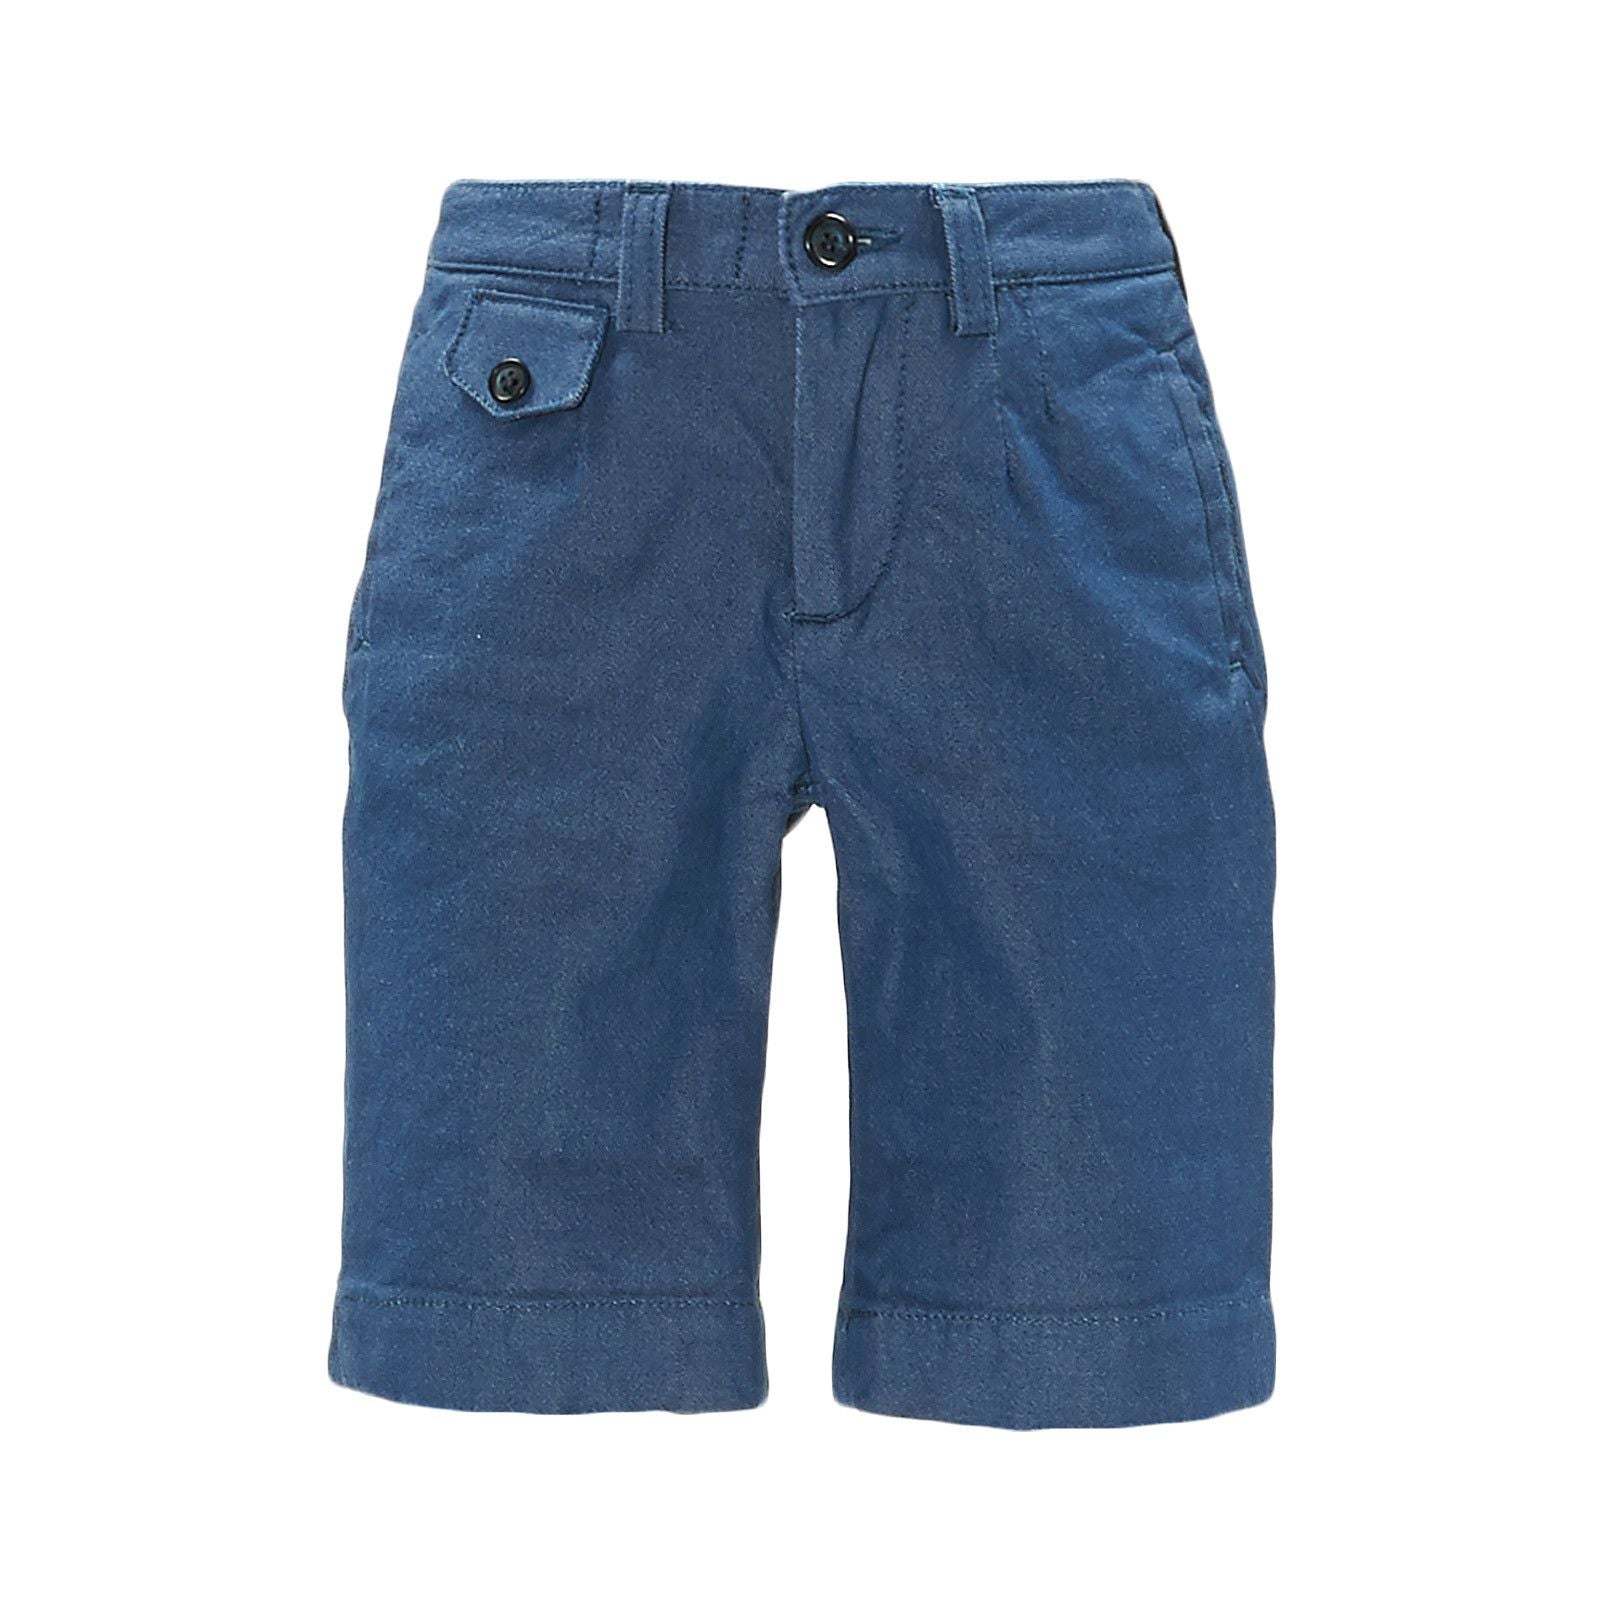 Boys Navy Blue Cotton Jersey Short - CÉMAROSE | Children's Fashion Store - 1